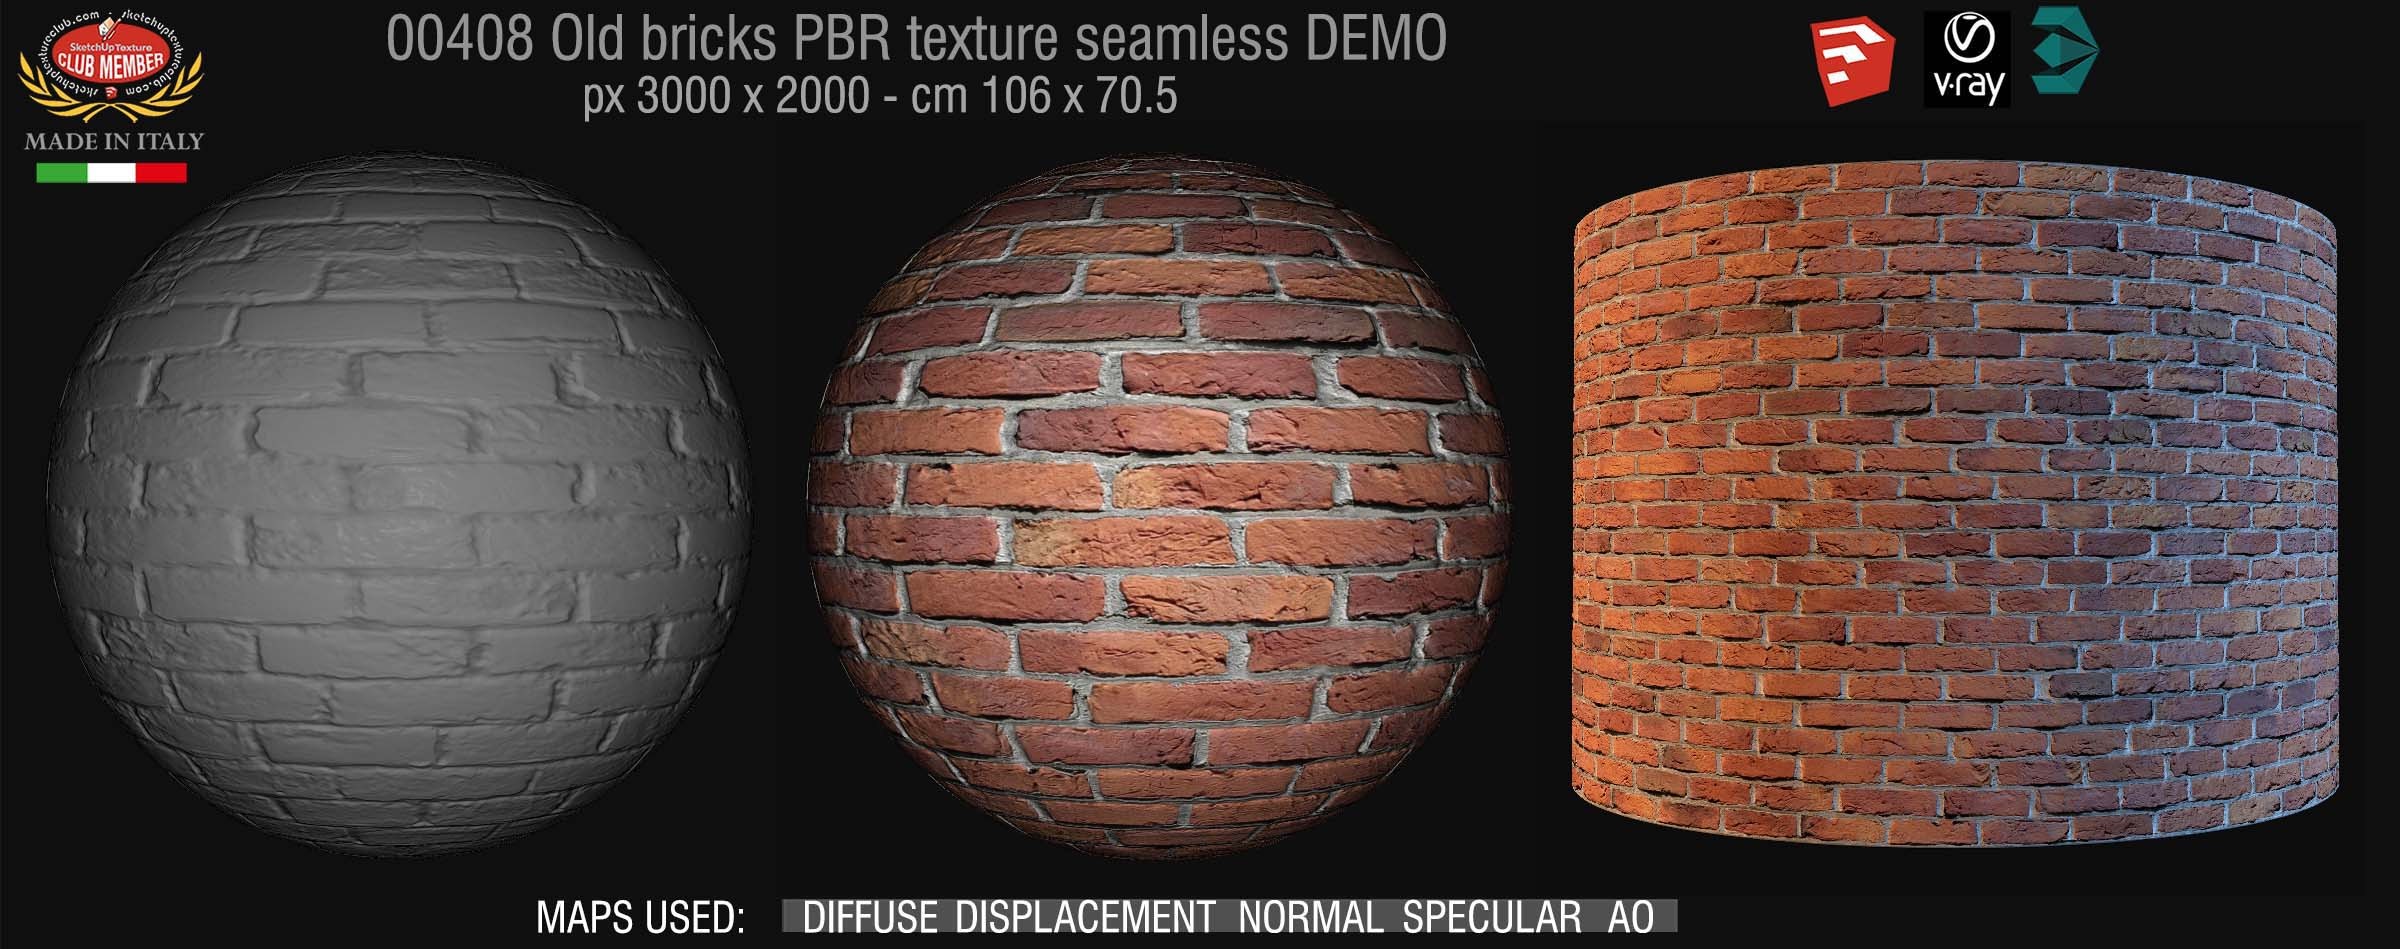 00408 Old bricks PBR texture seamless DEMO